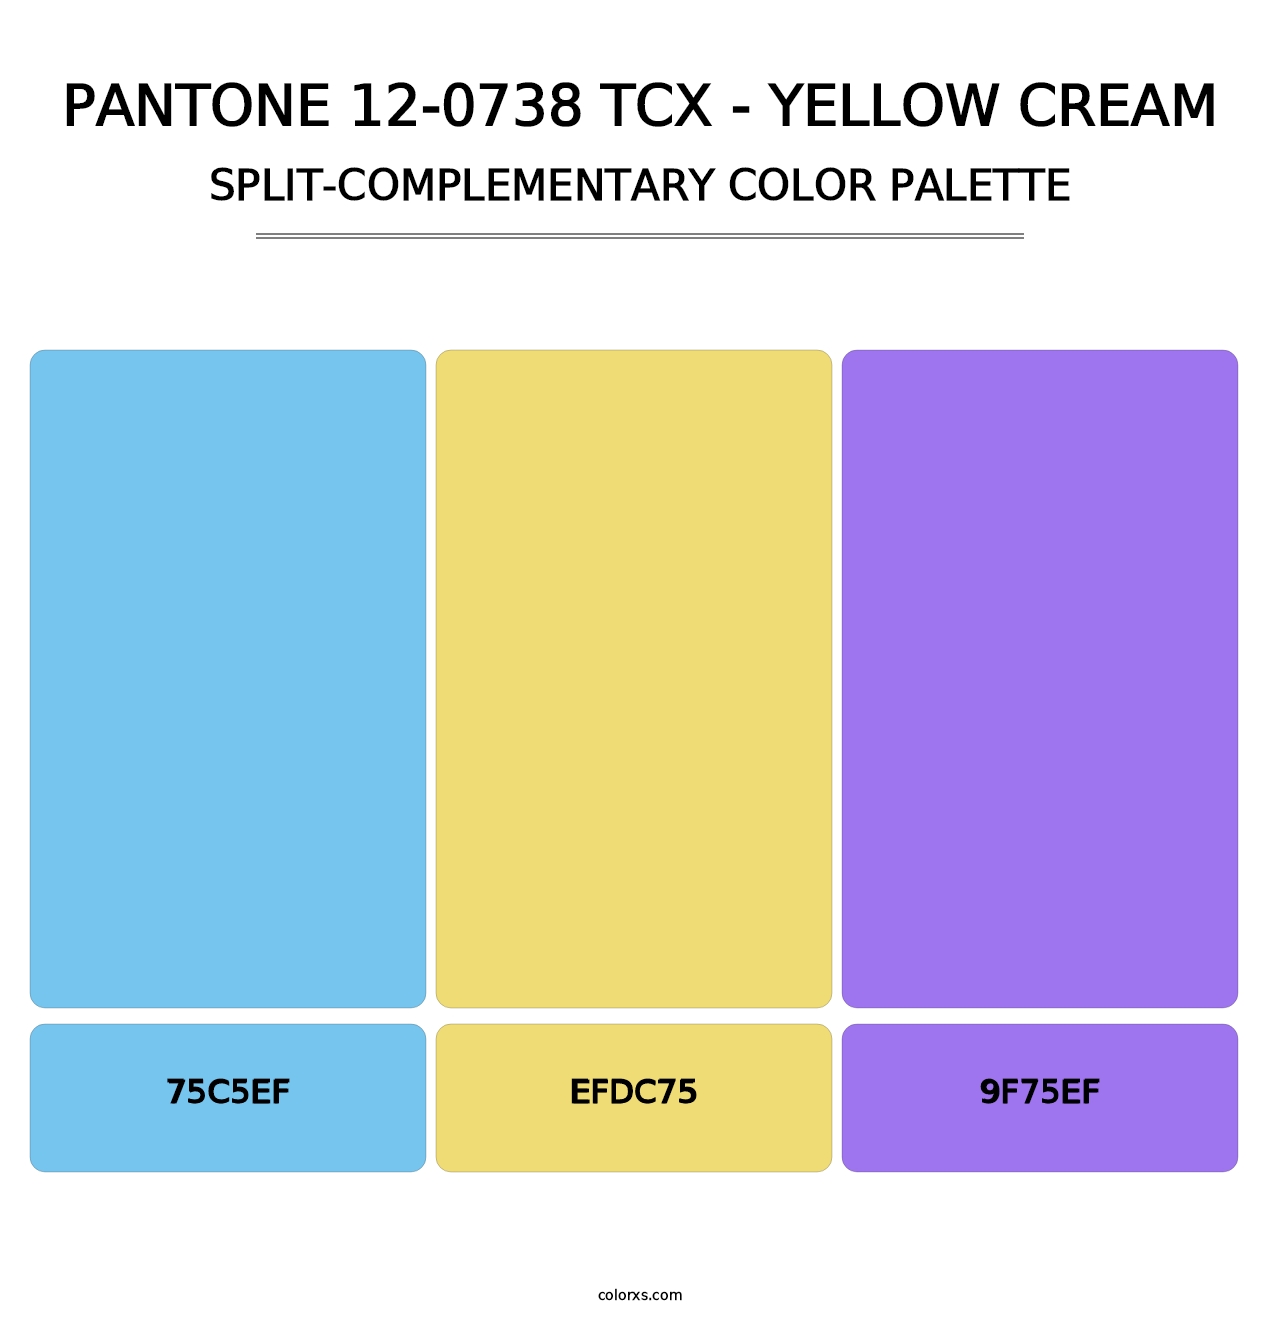 PANTONE 12-0738 TCX - Yellow Cream - Split-Complementary Color Palette